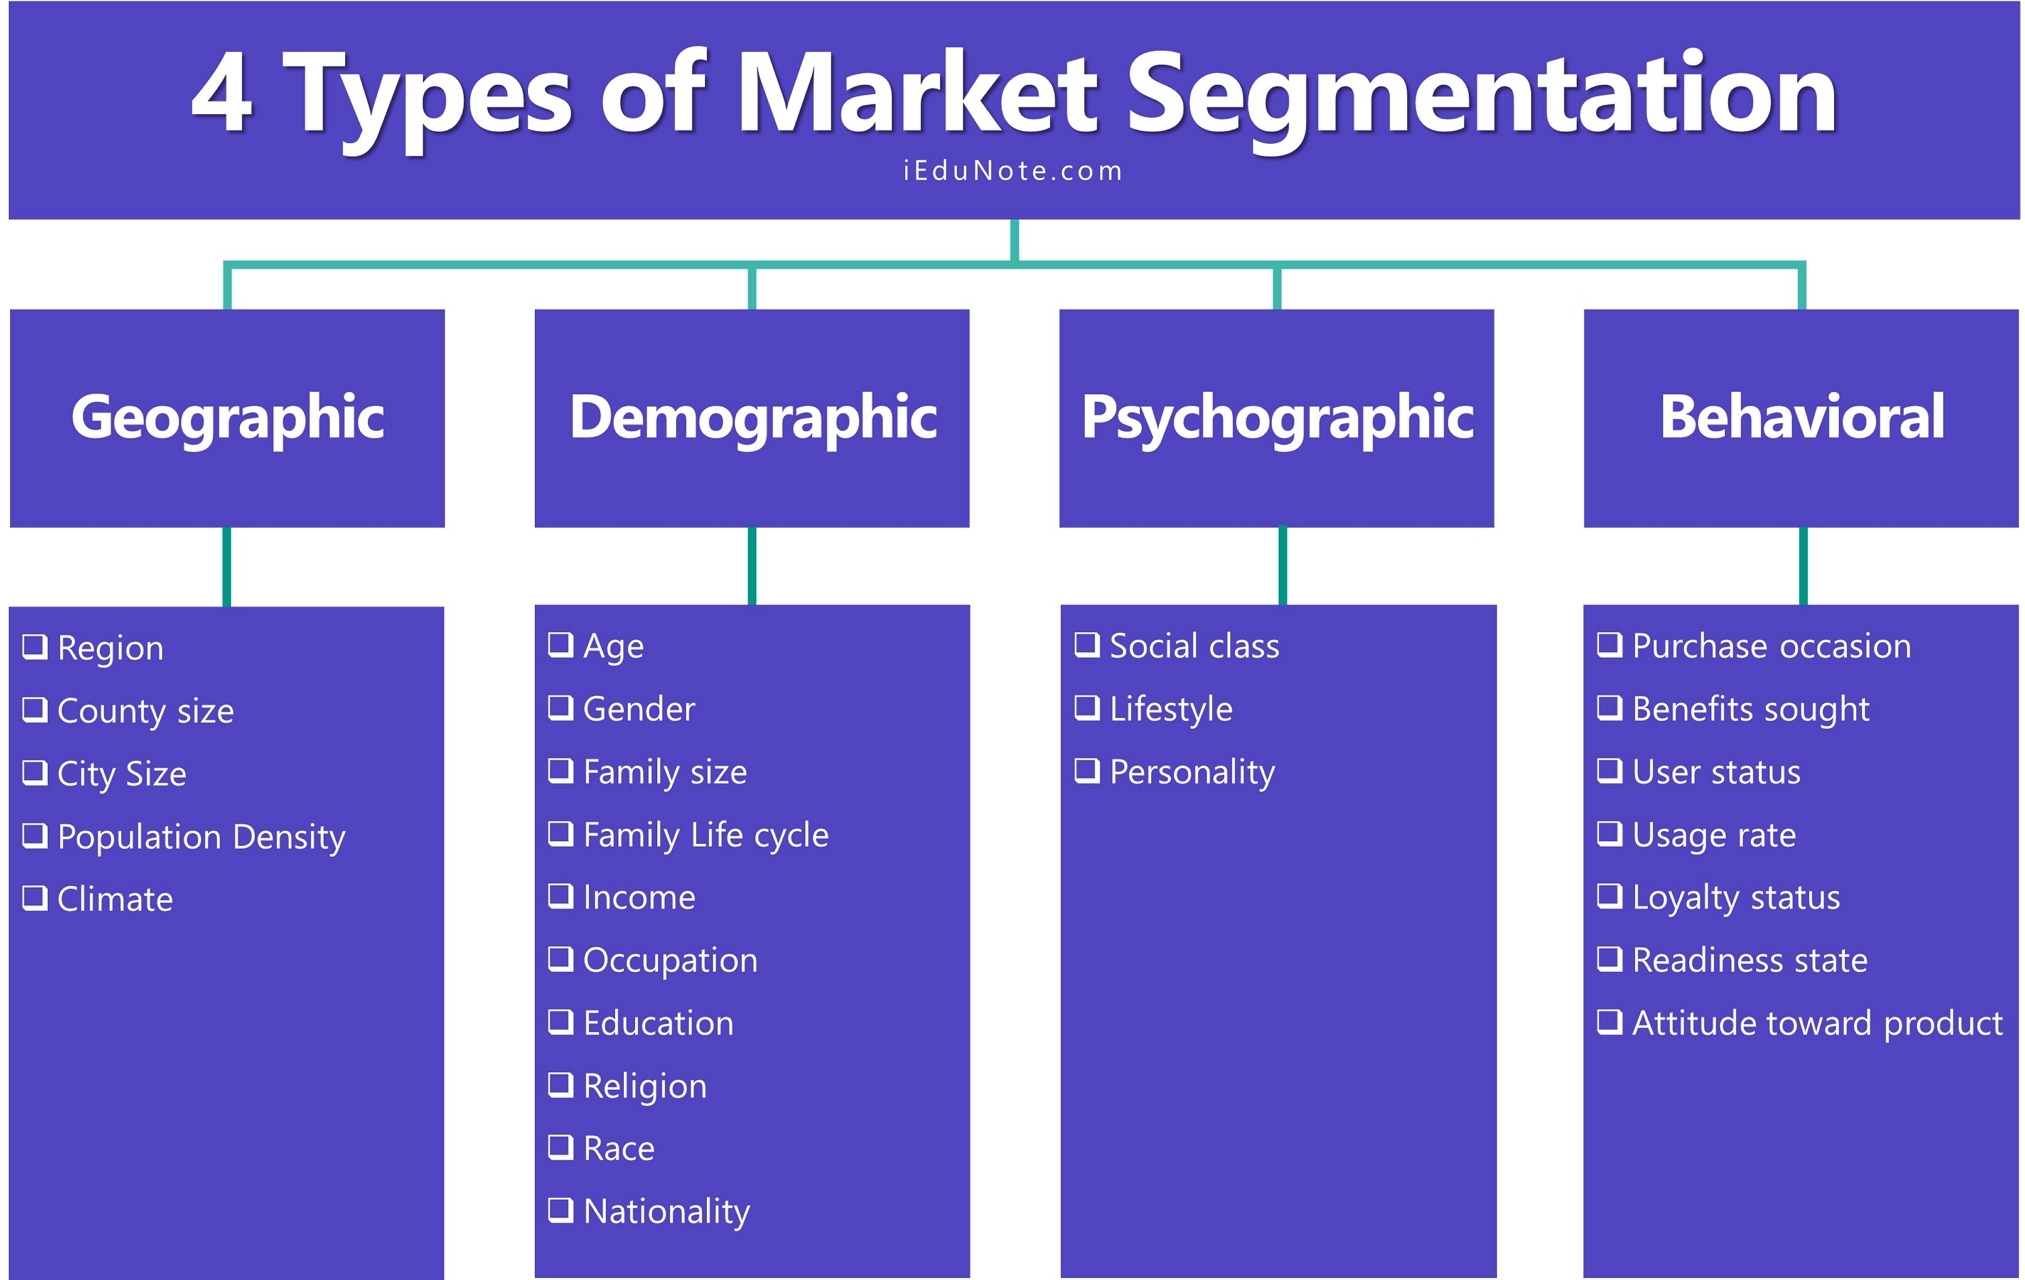 4 Types of Market Segmentation: Bases of Consumer Market Segmentation